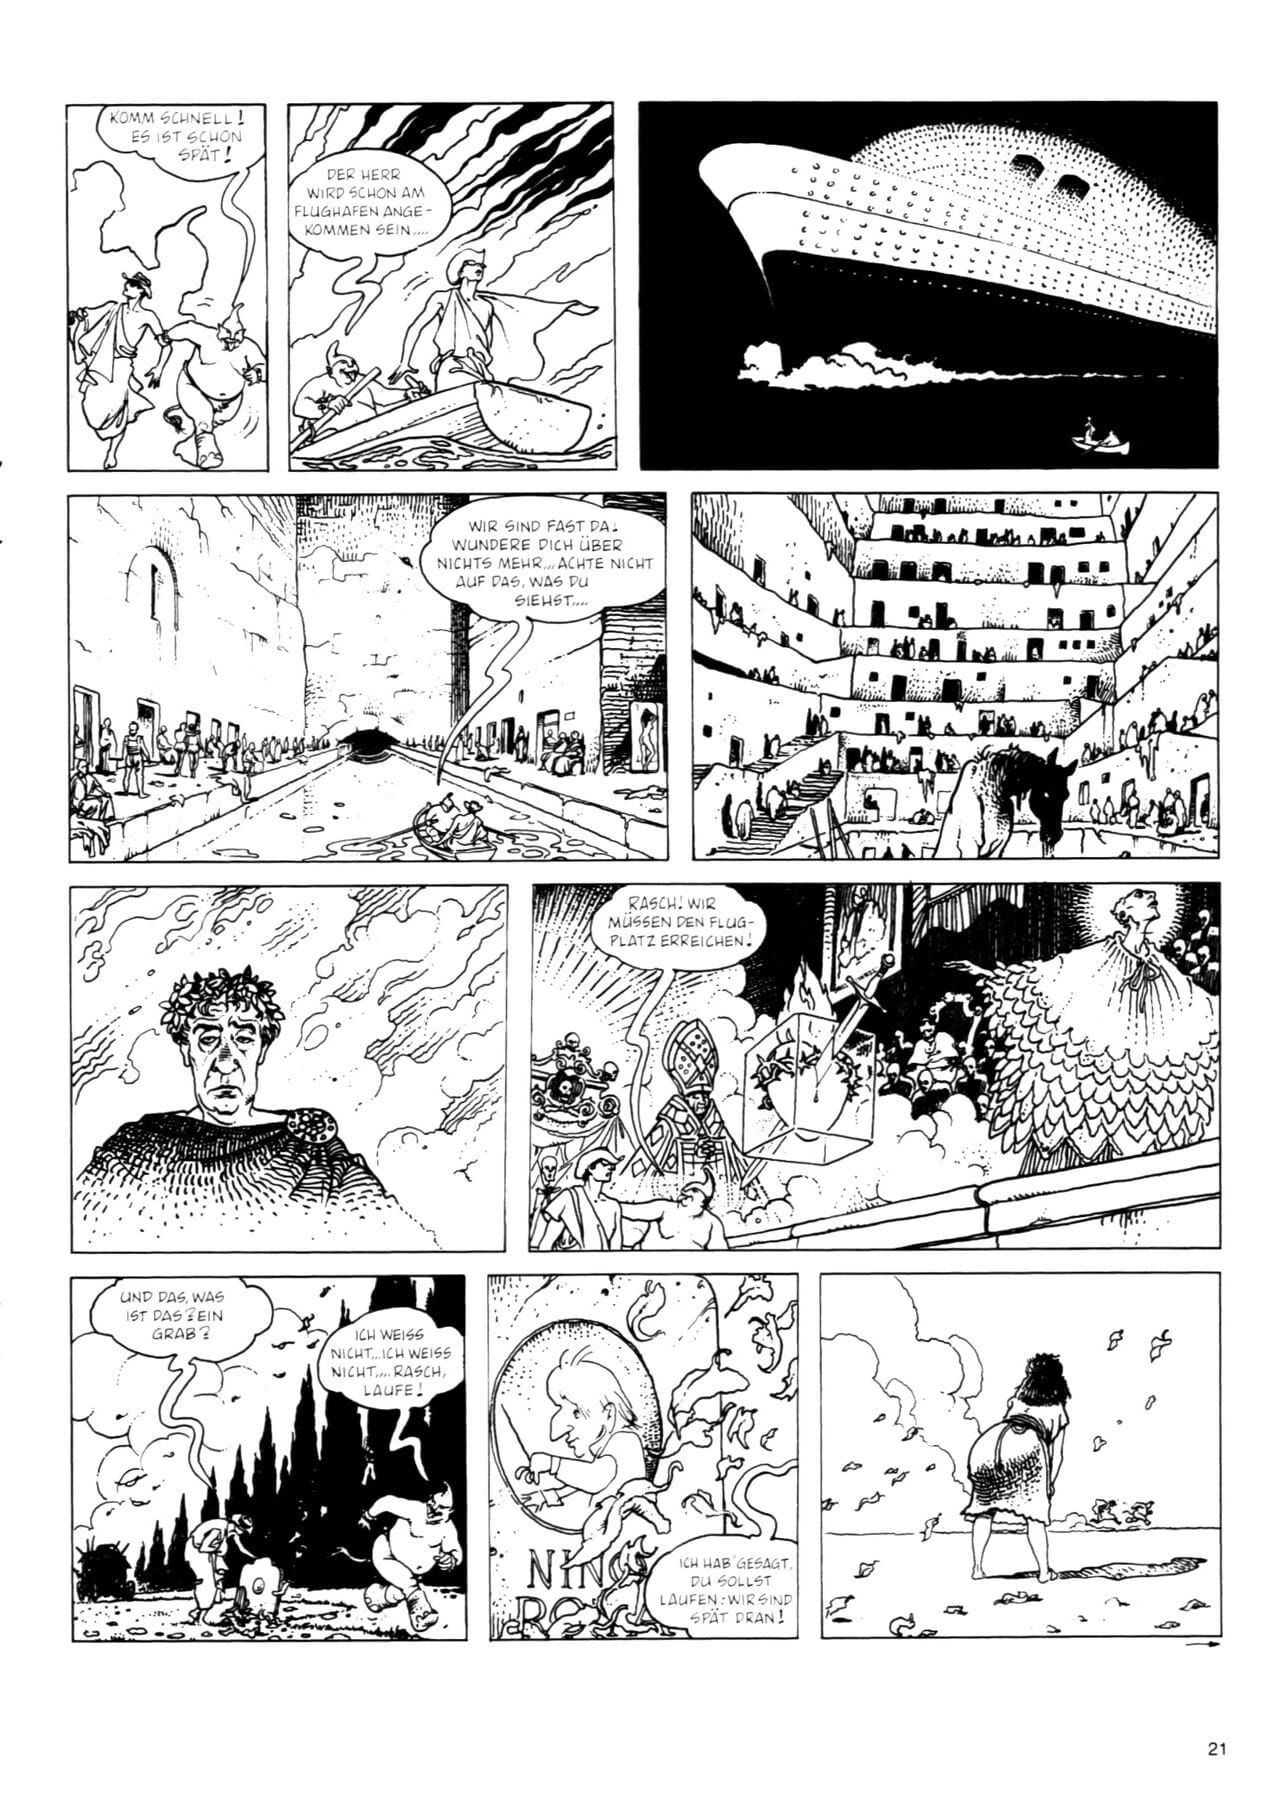 schwermetall #054 page 1